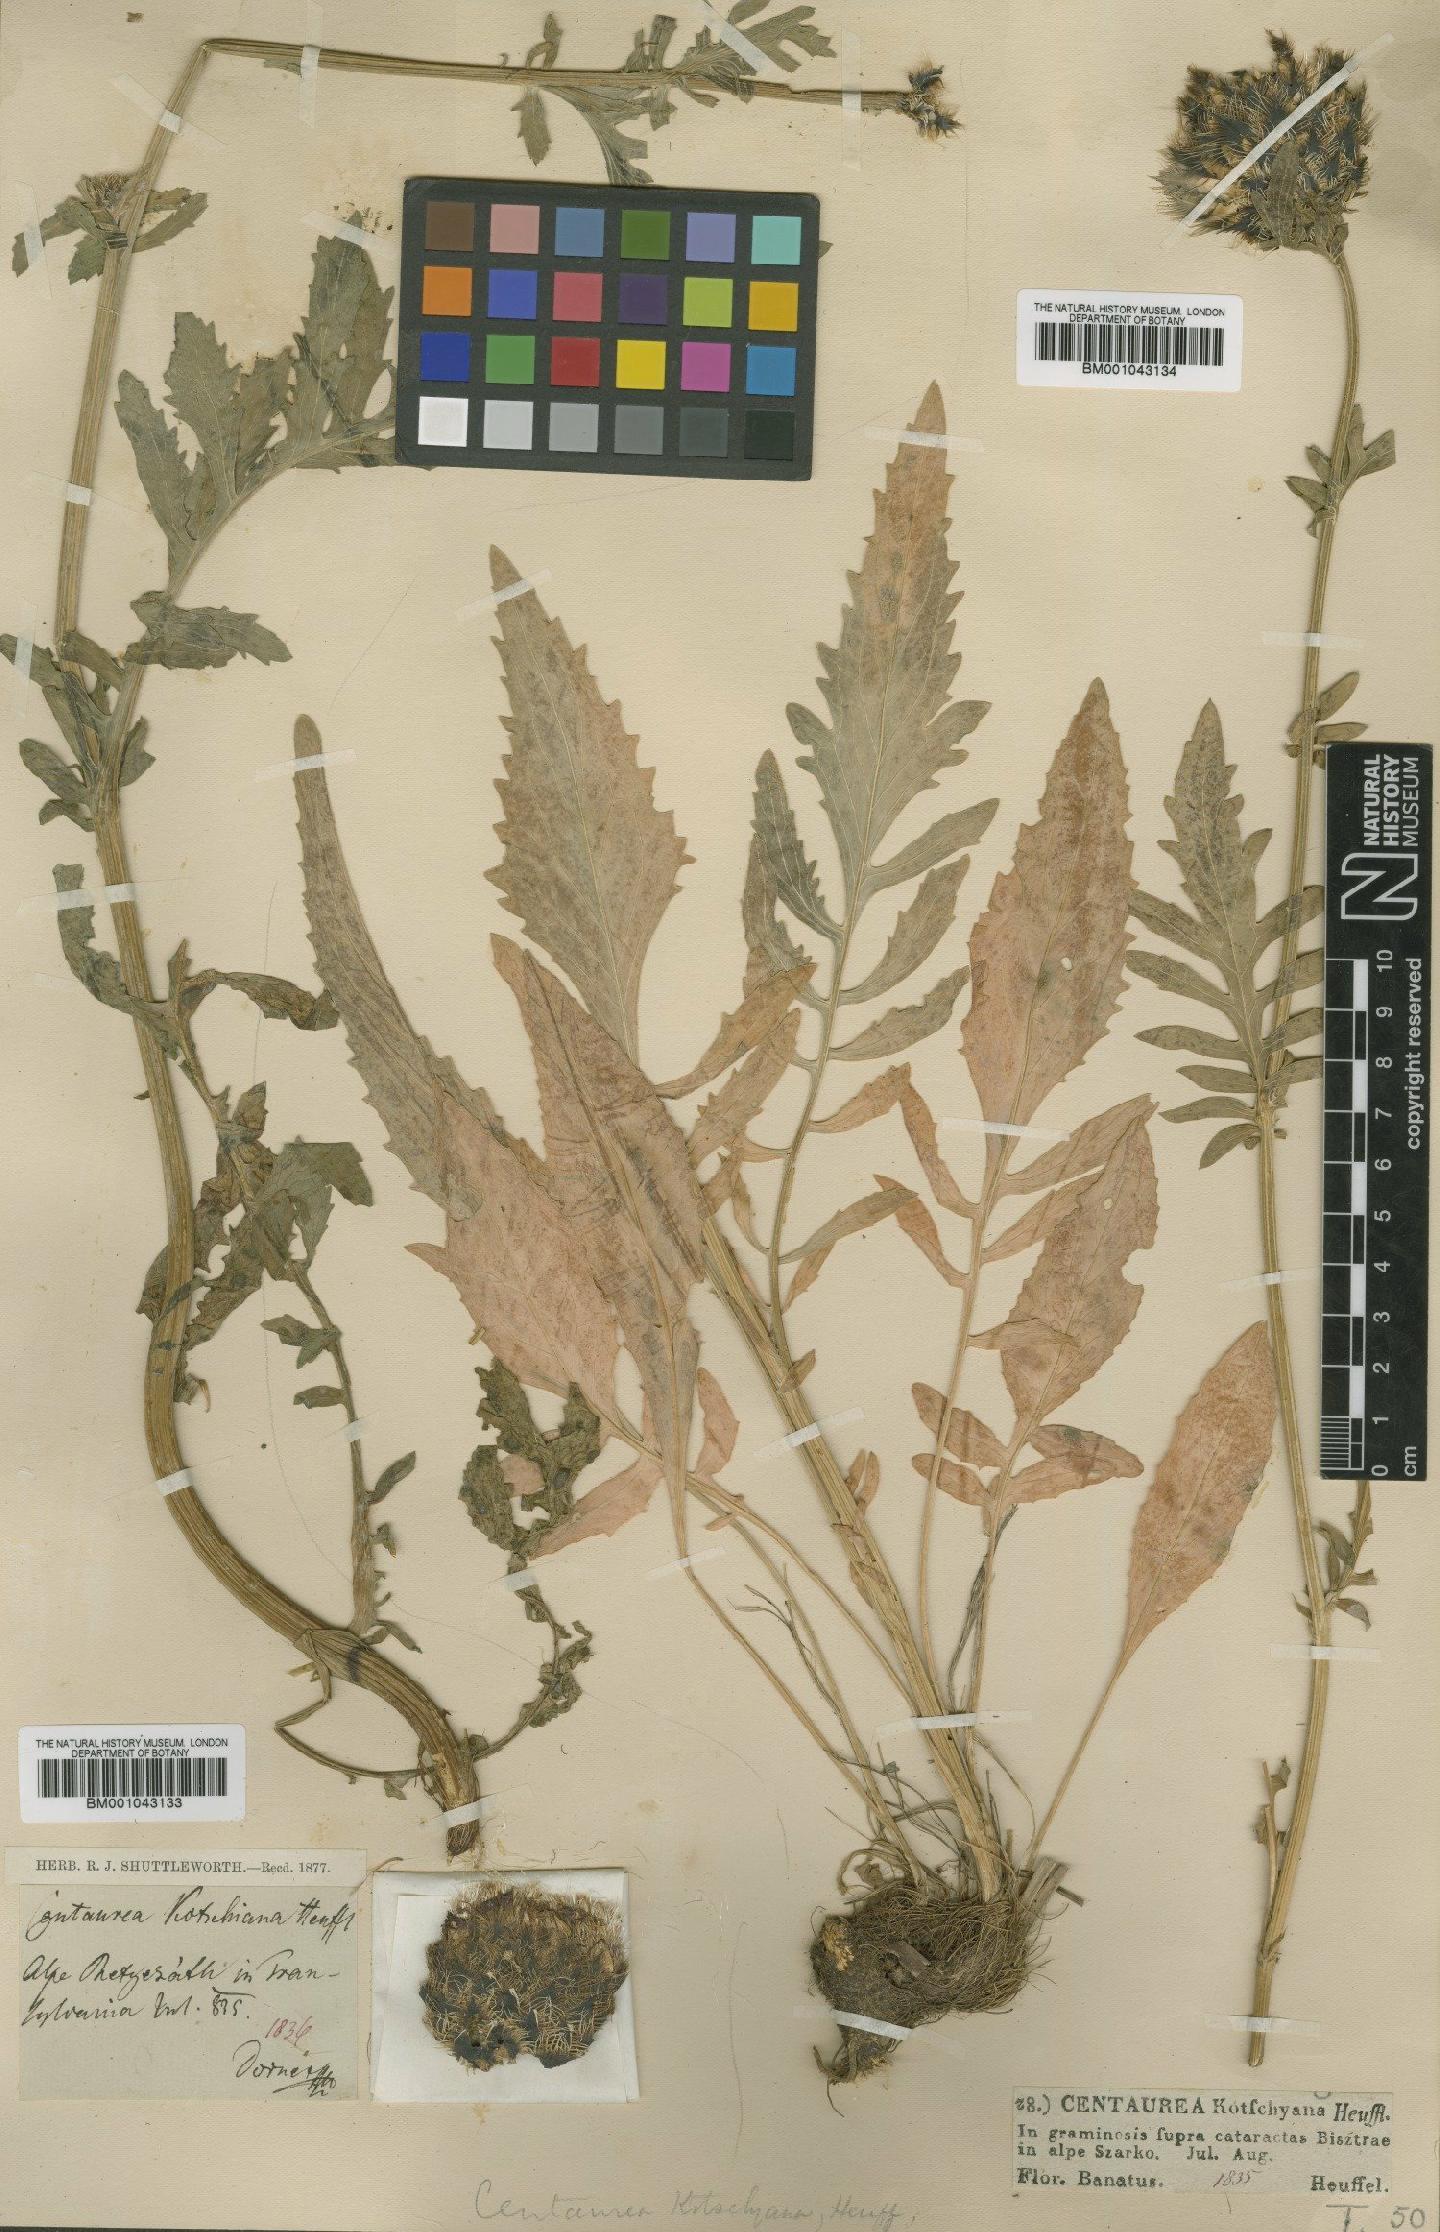 To NHMUK collection (Centaurea kotschyana Heuff.; Type; NHMUK:ecatalogue:1987275)